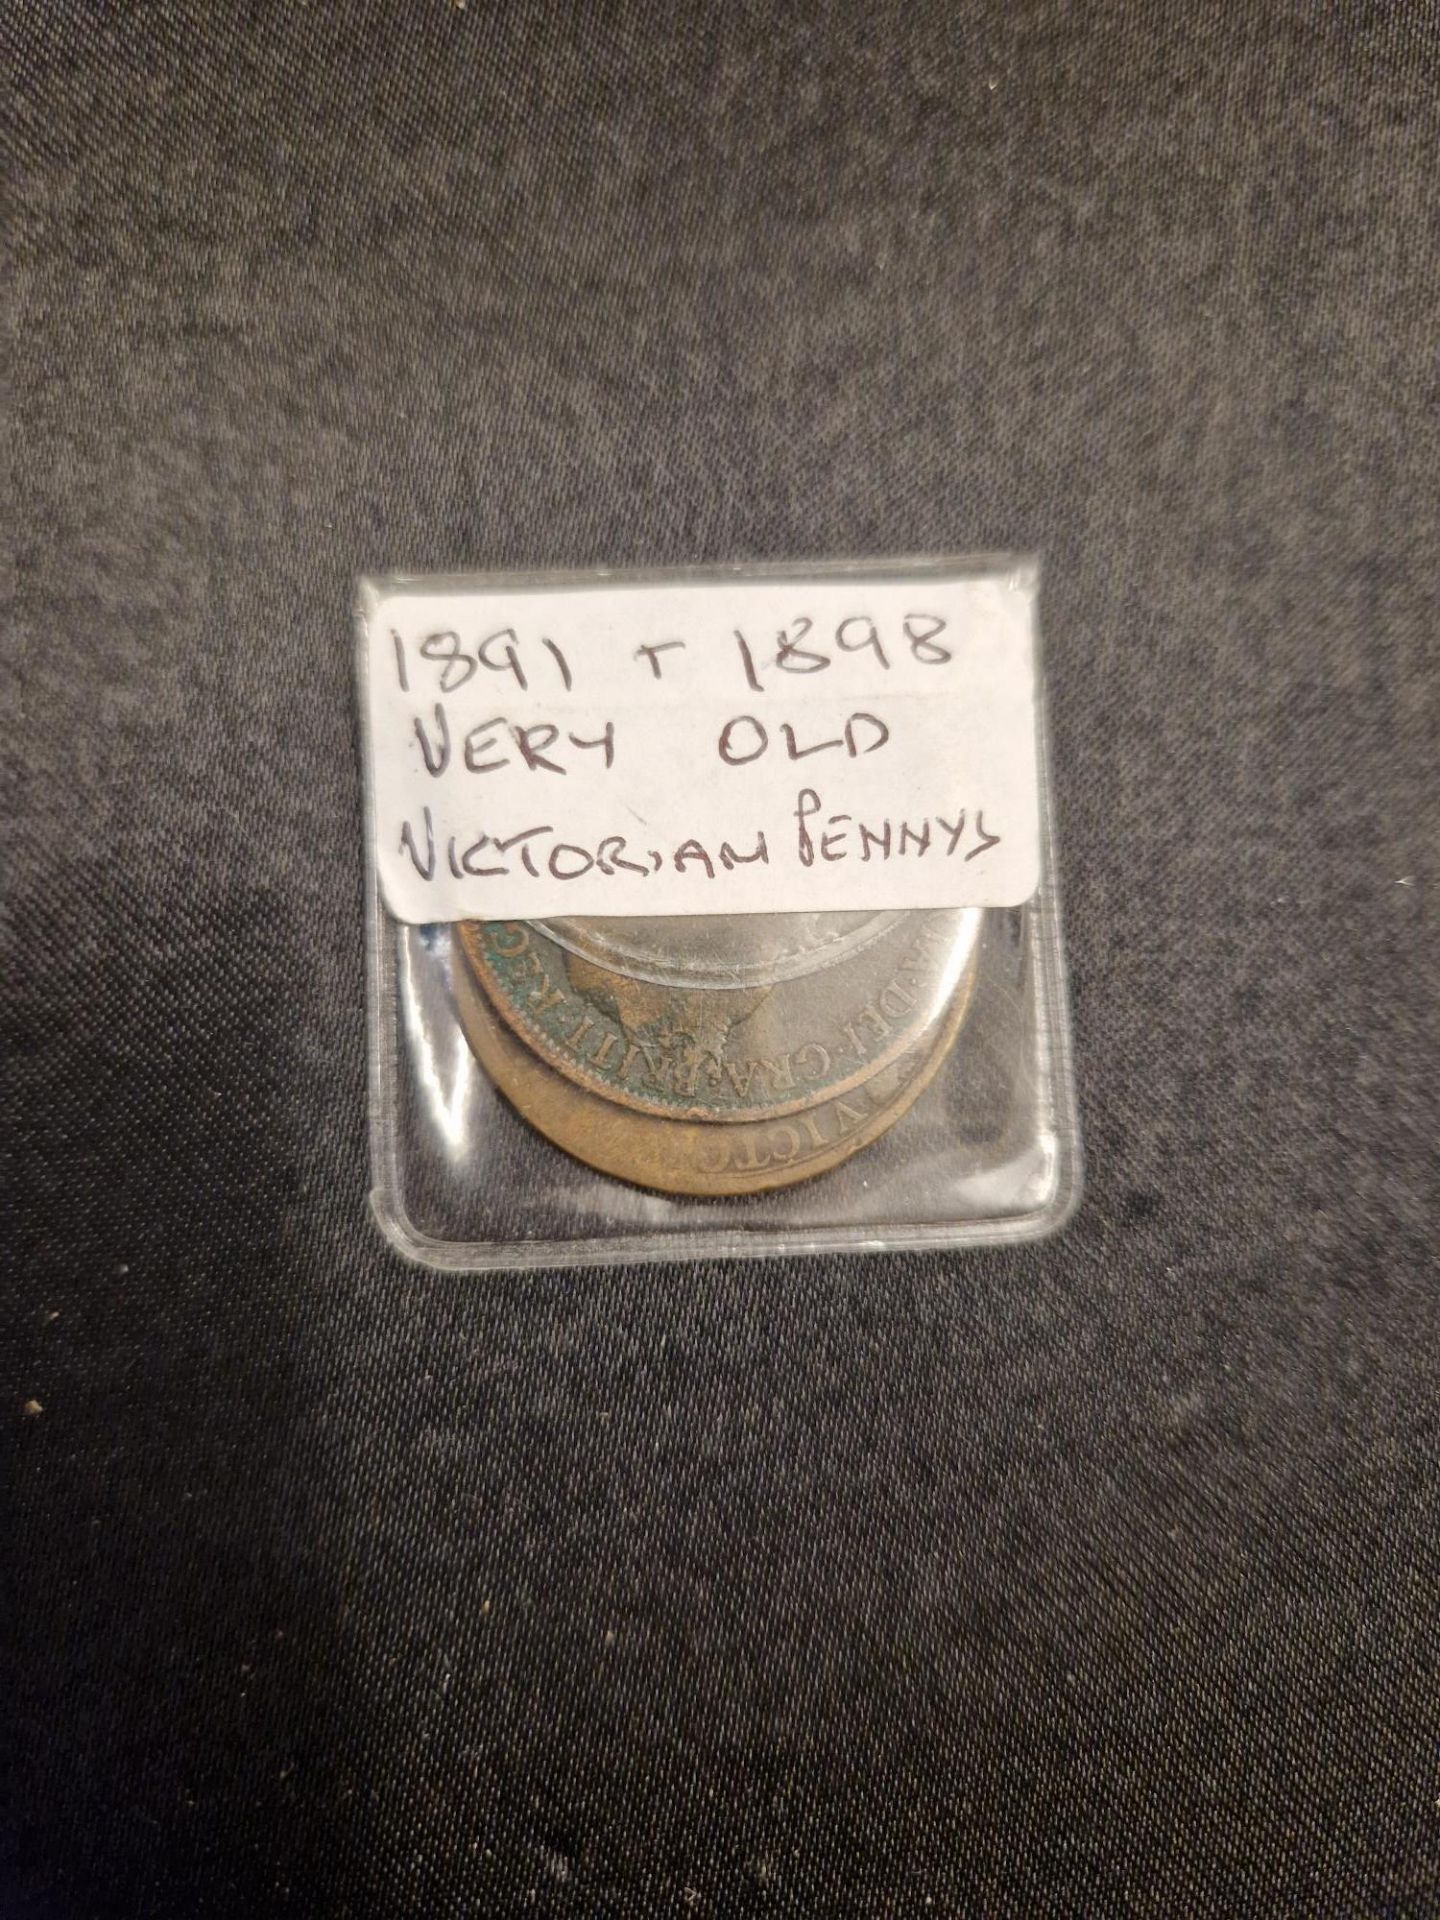 1891 + 1898 victorian pennys